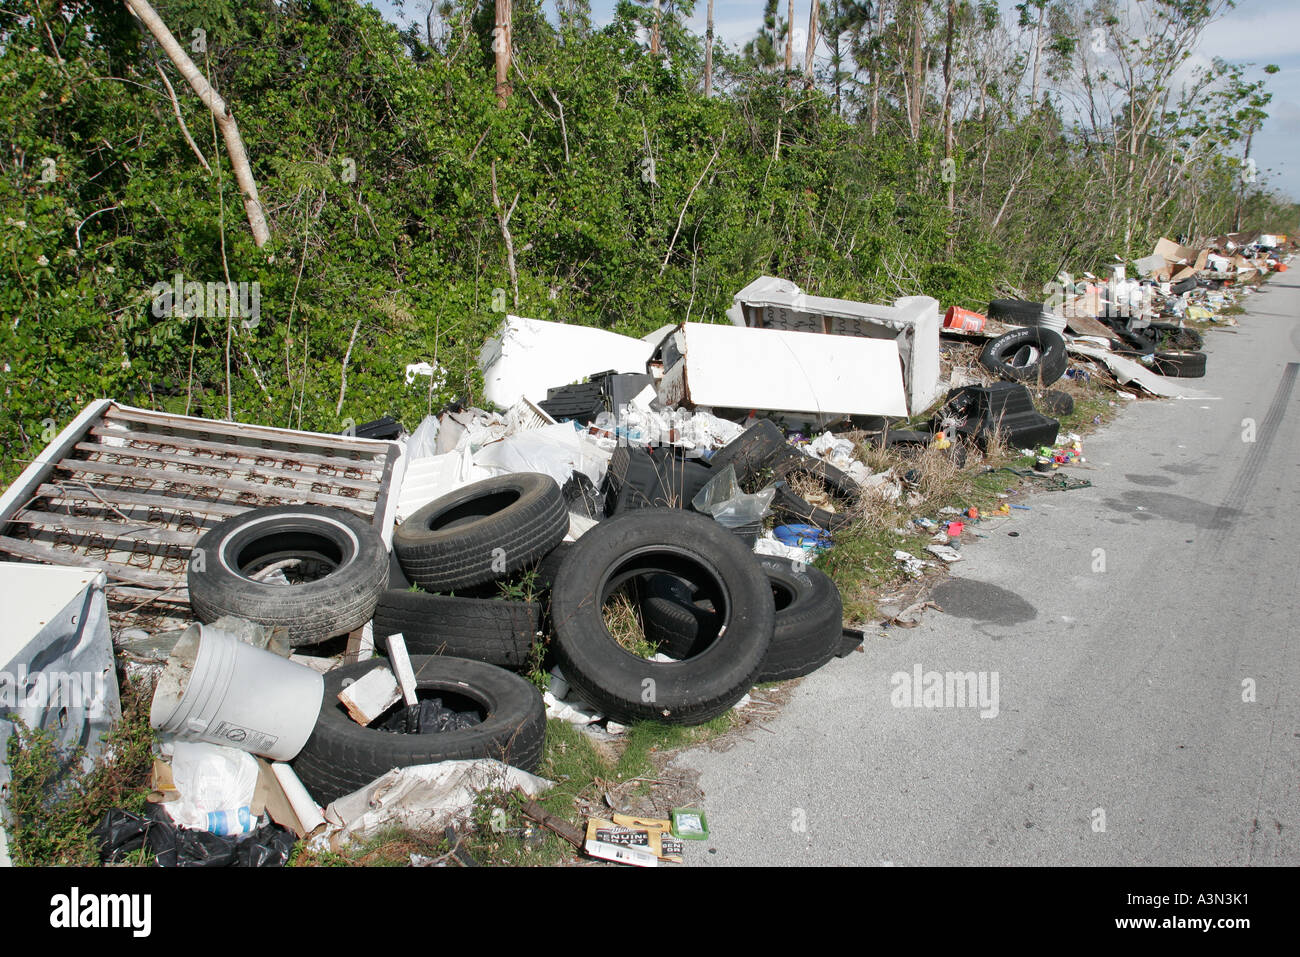 Miami Florida,Homestead,illegal dumping site,roadside,tires,appliances,trash,pollution,litter,trash,pollution,clutter,environment,trash,visitors trave Stock Photo